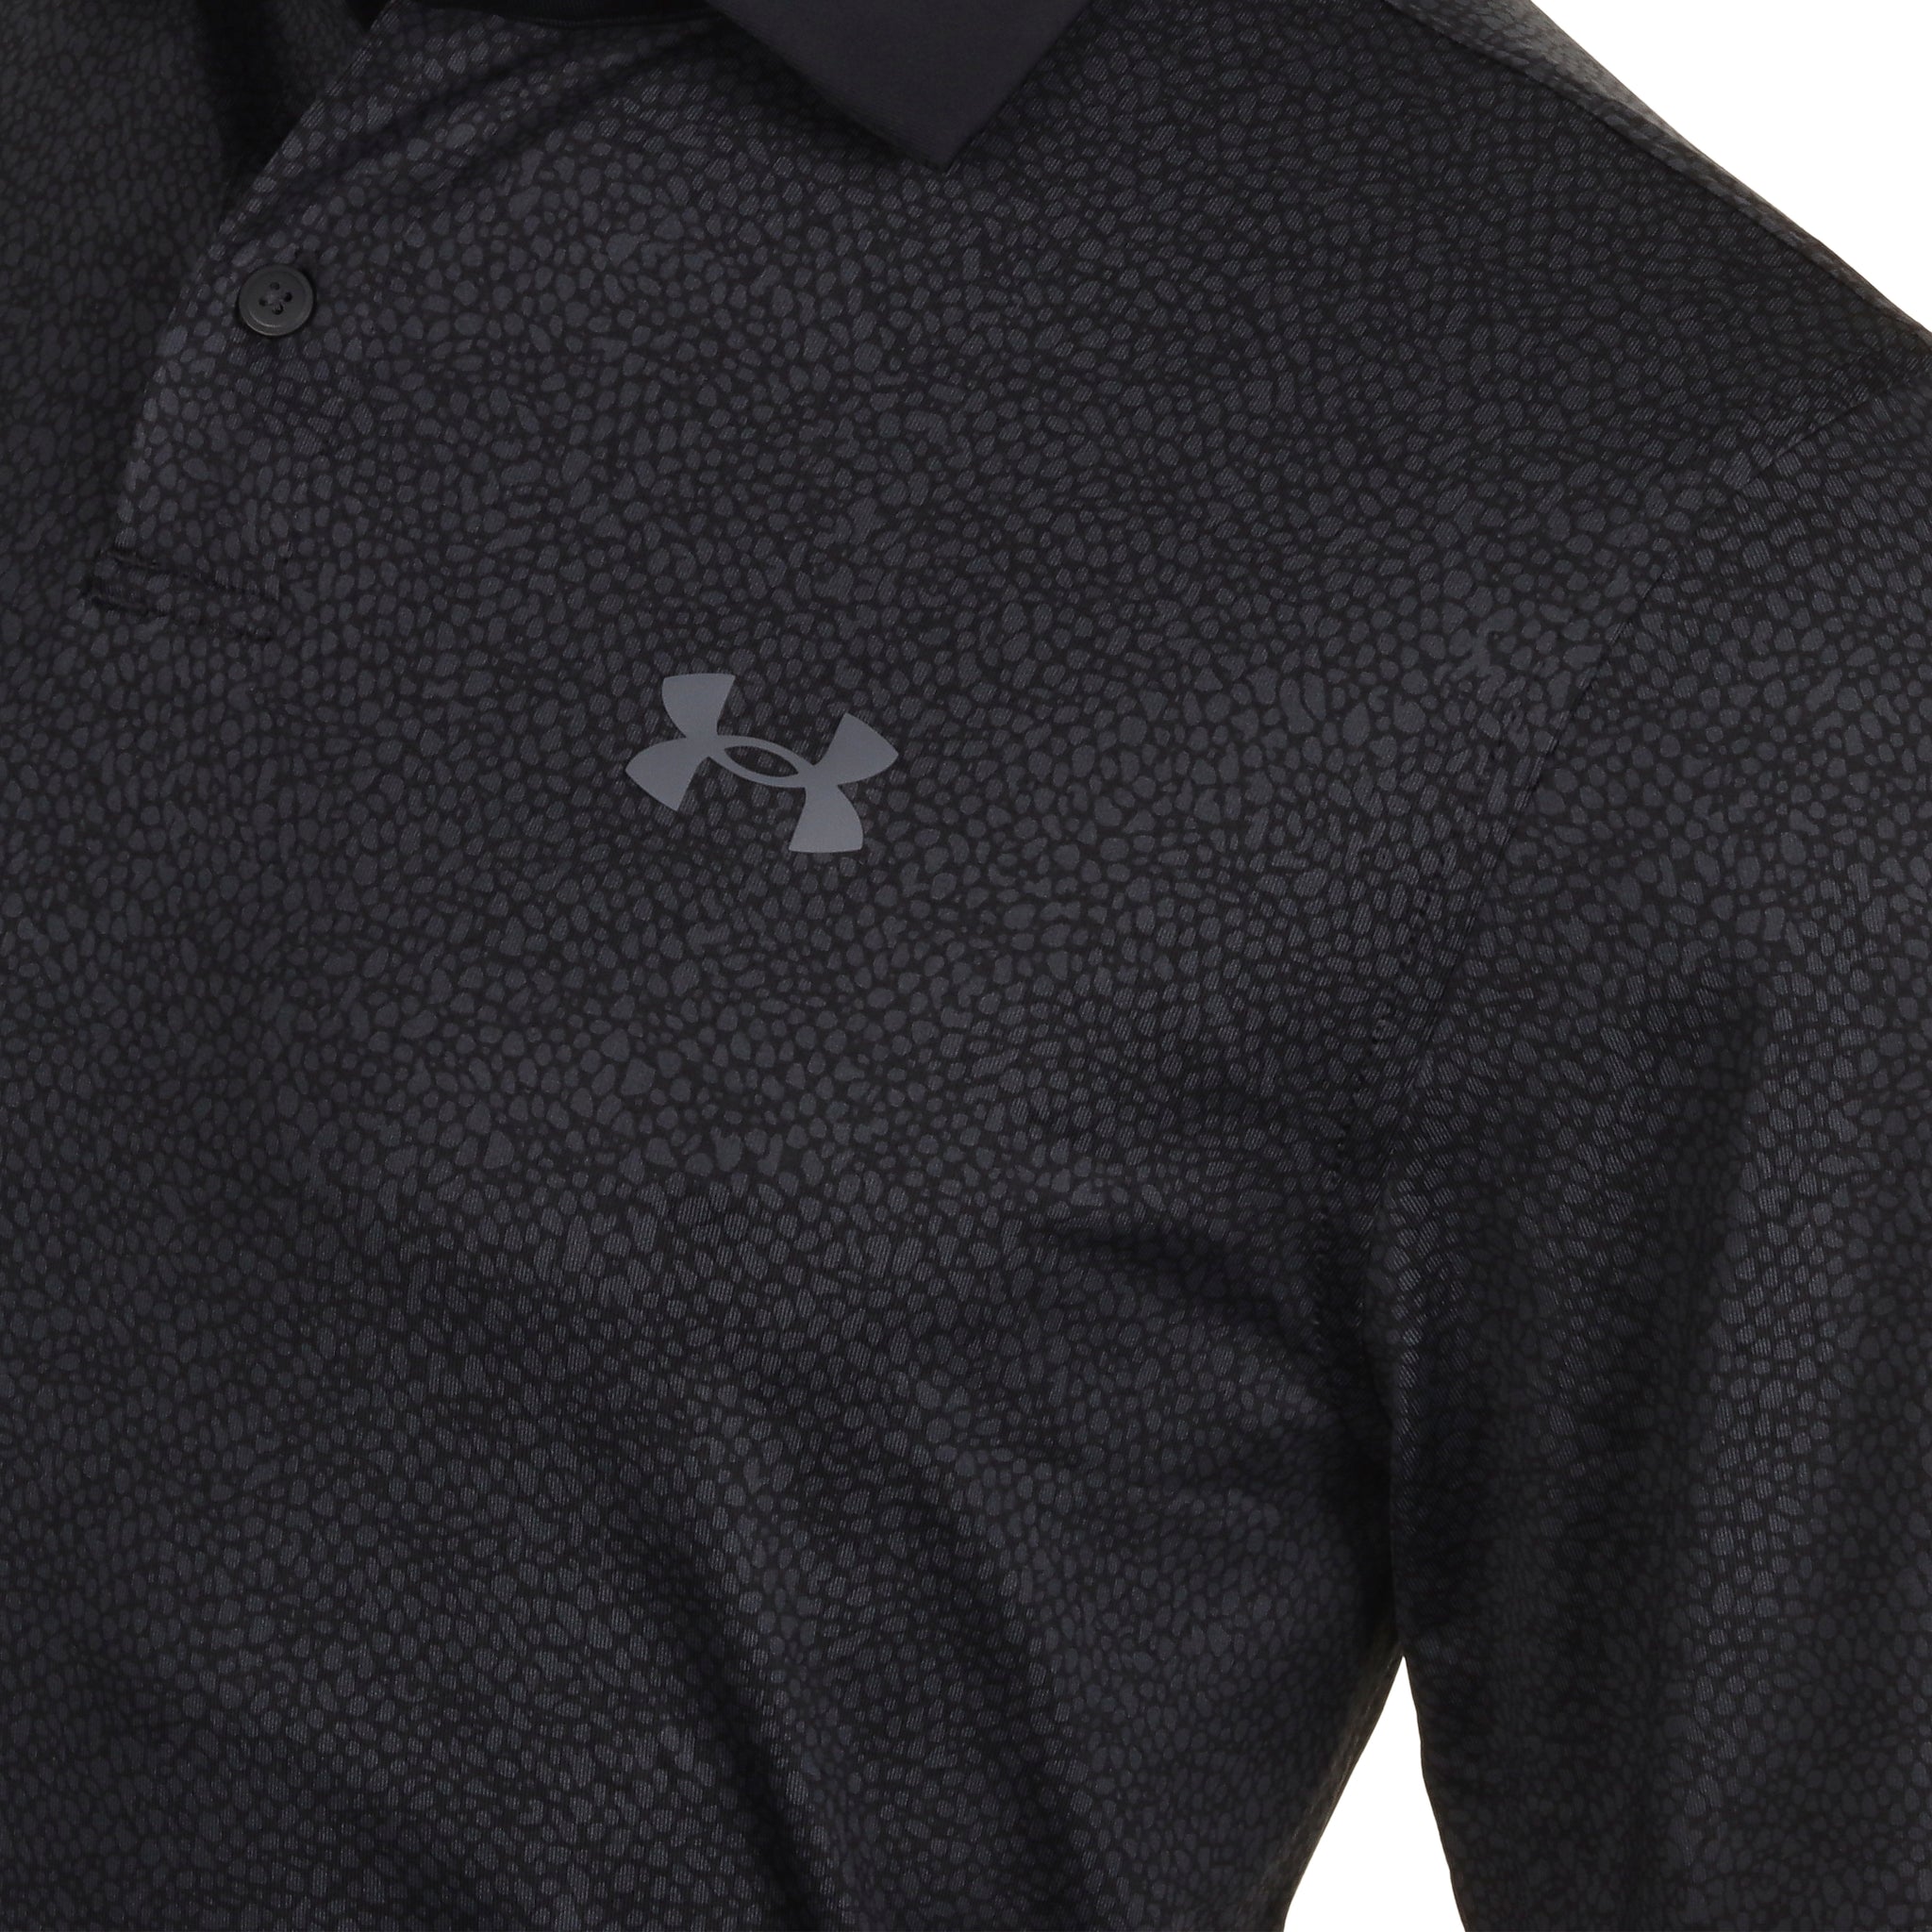 under-armour-golf-t2g-printed-shirt-1383715-black-001